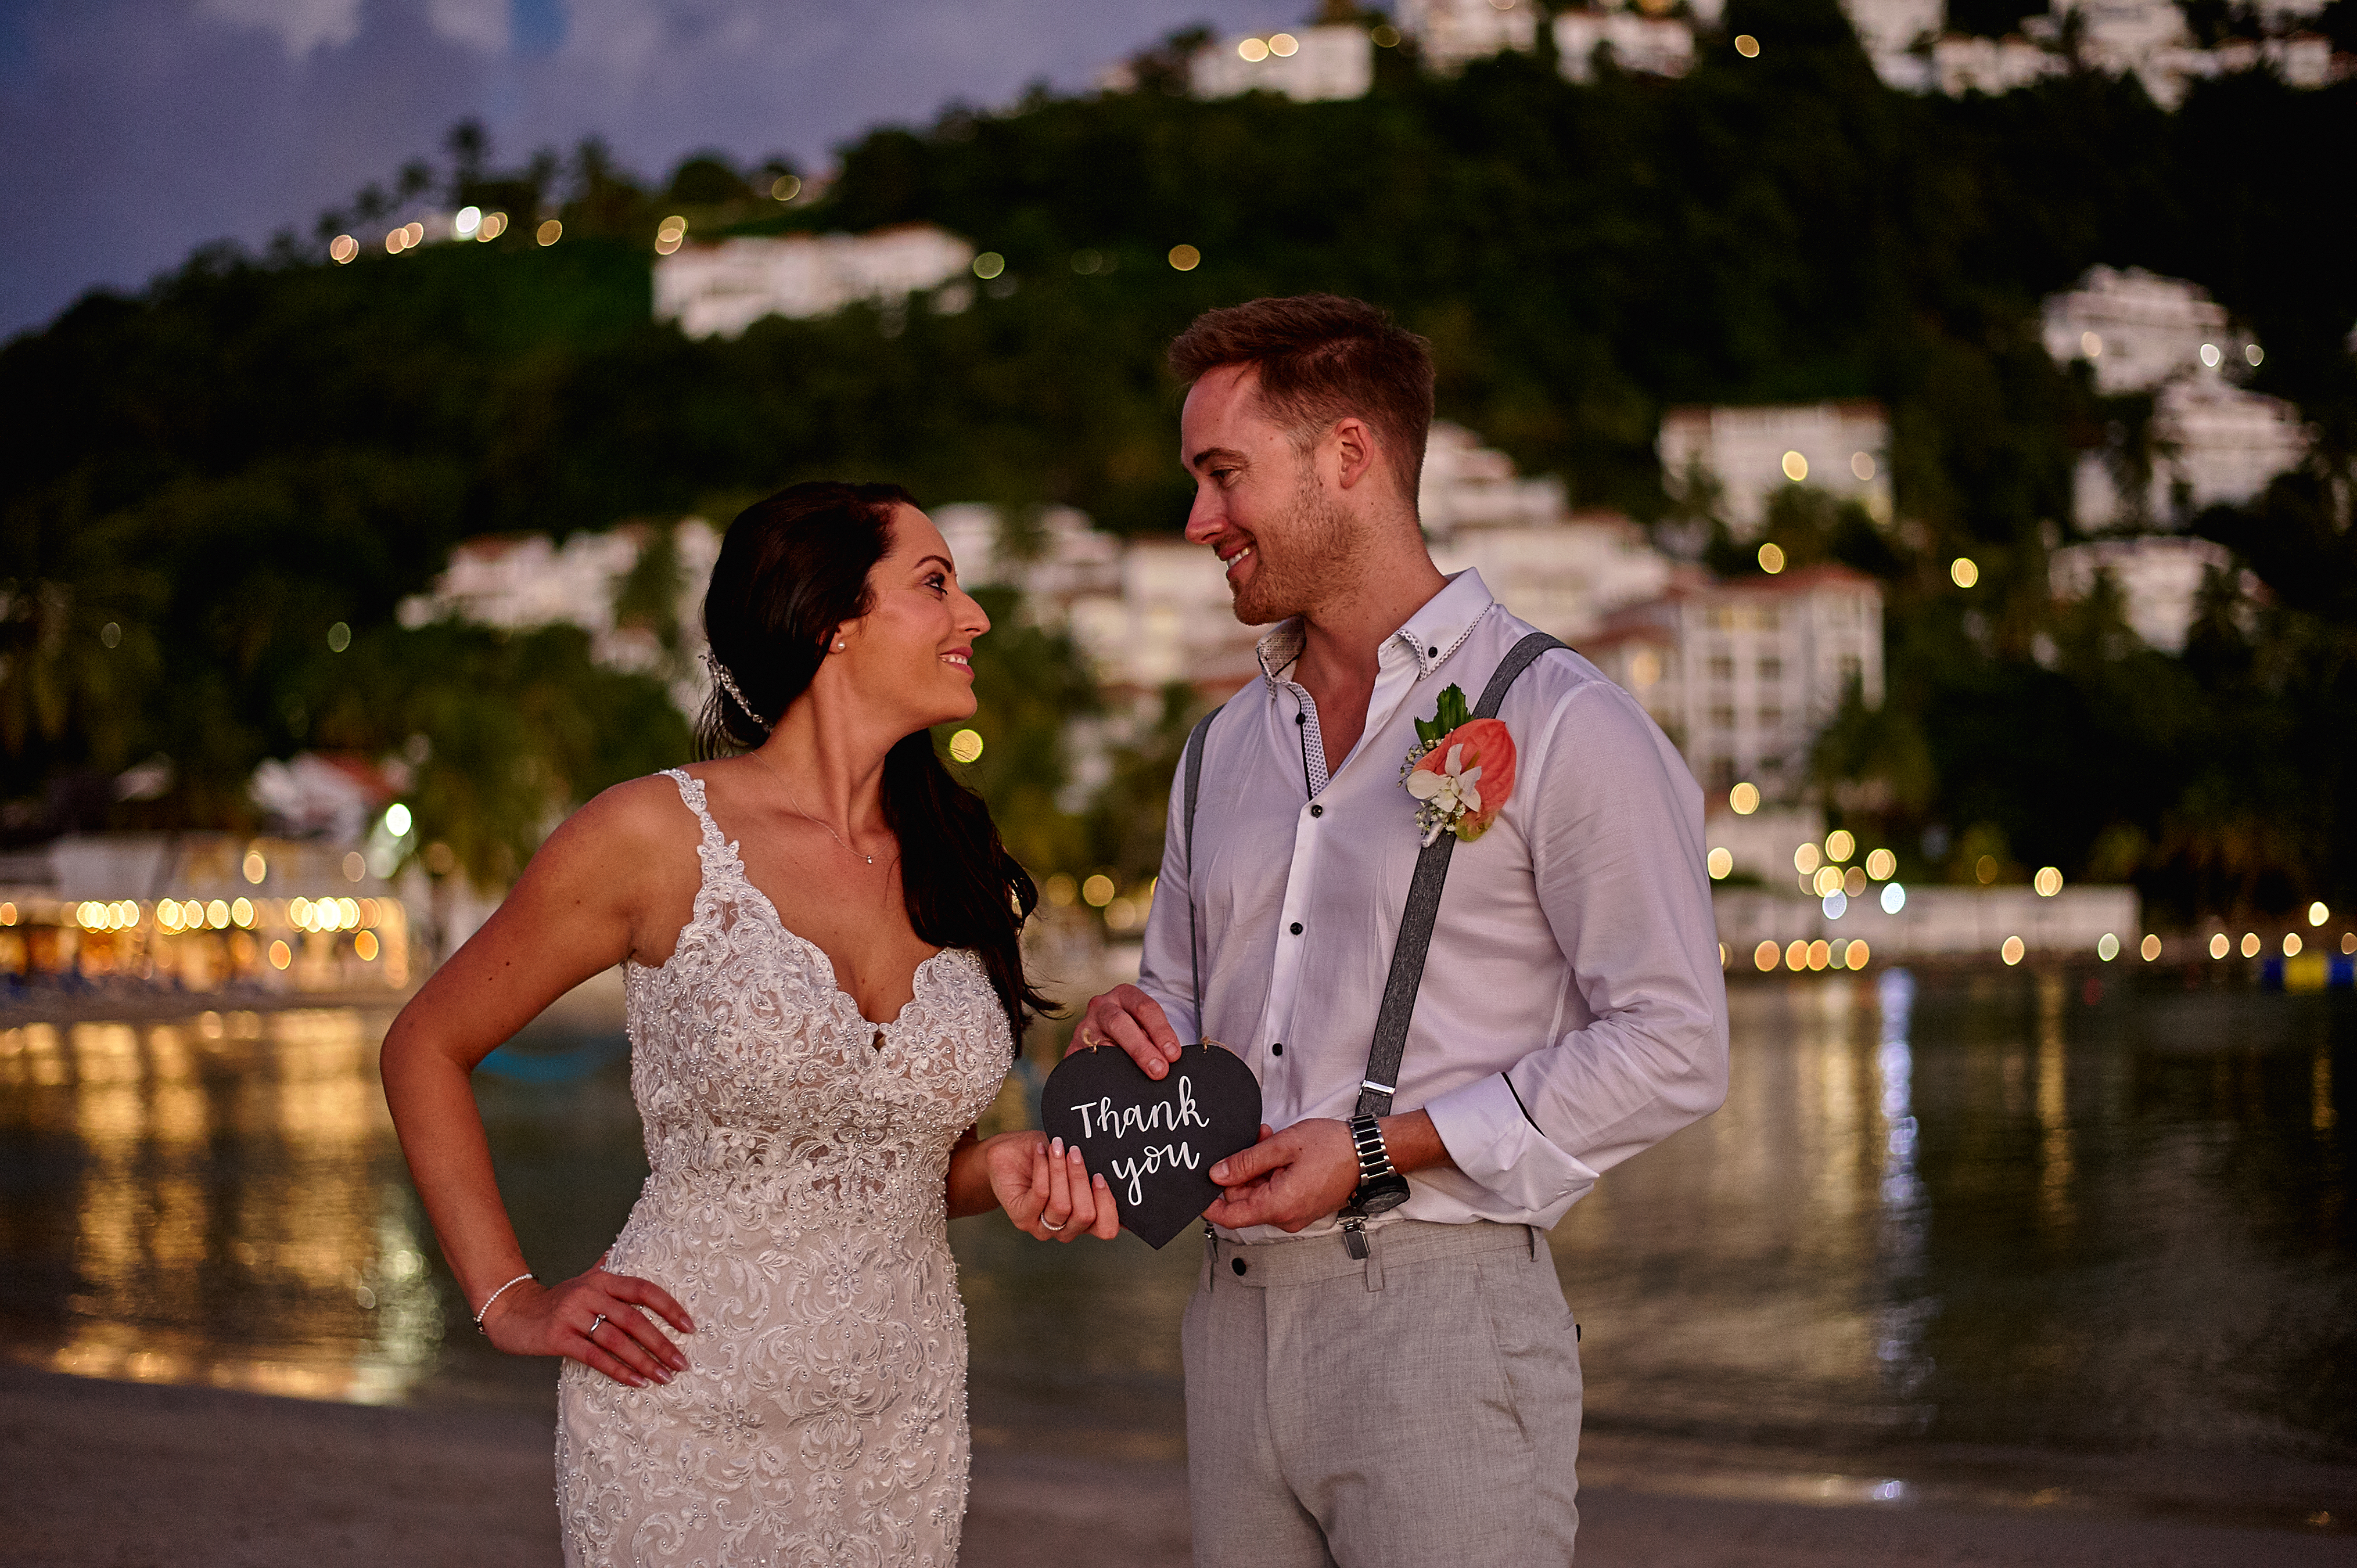 Book your wedding day in Windjammer Landing Villa Beach Resort